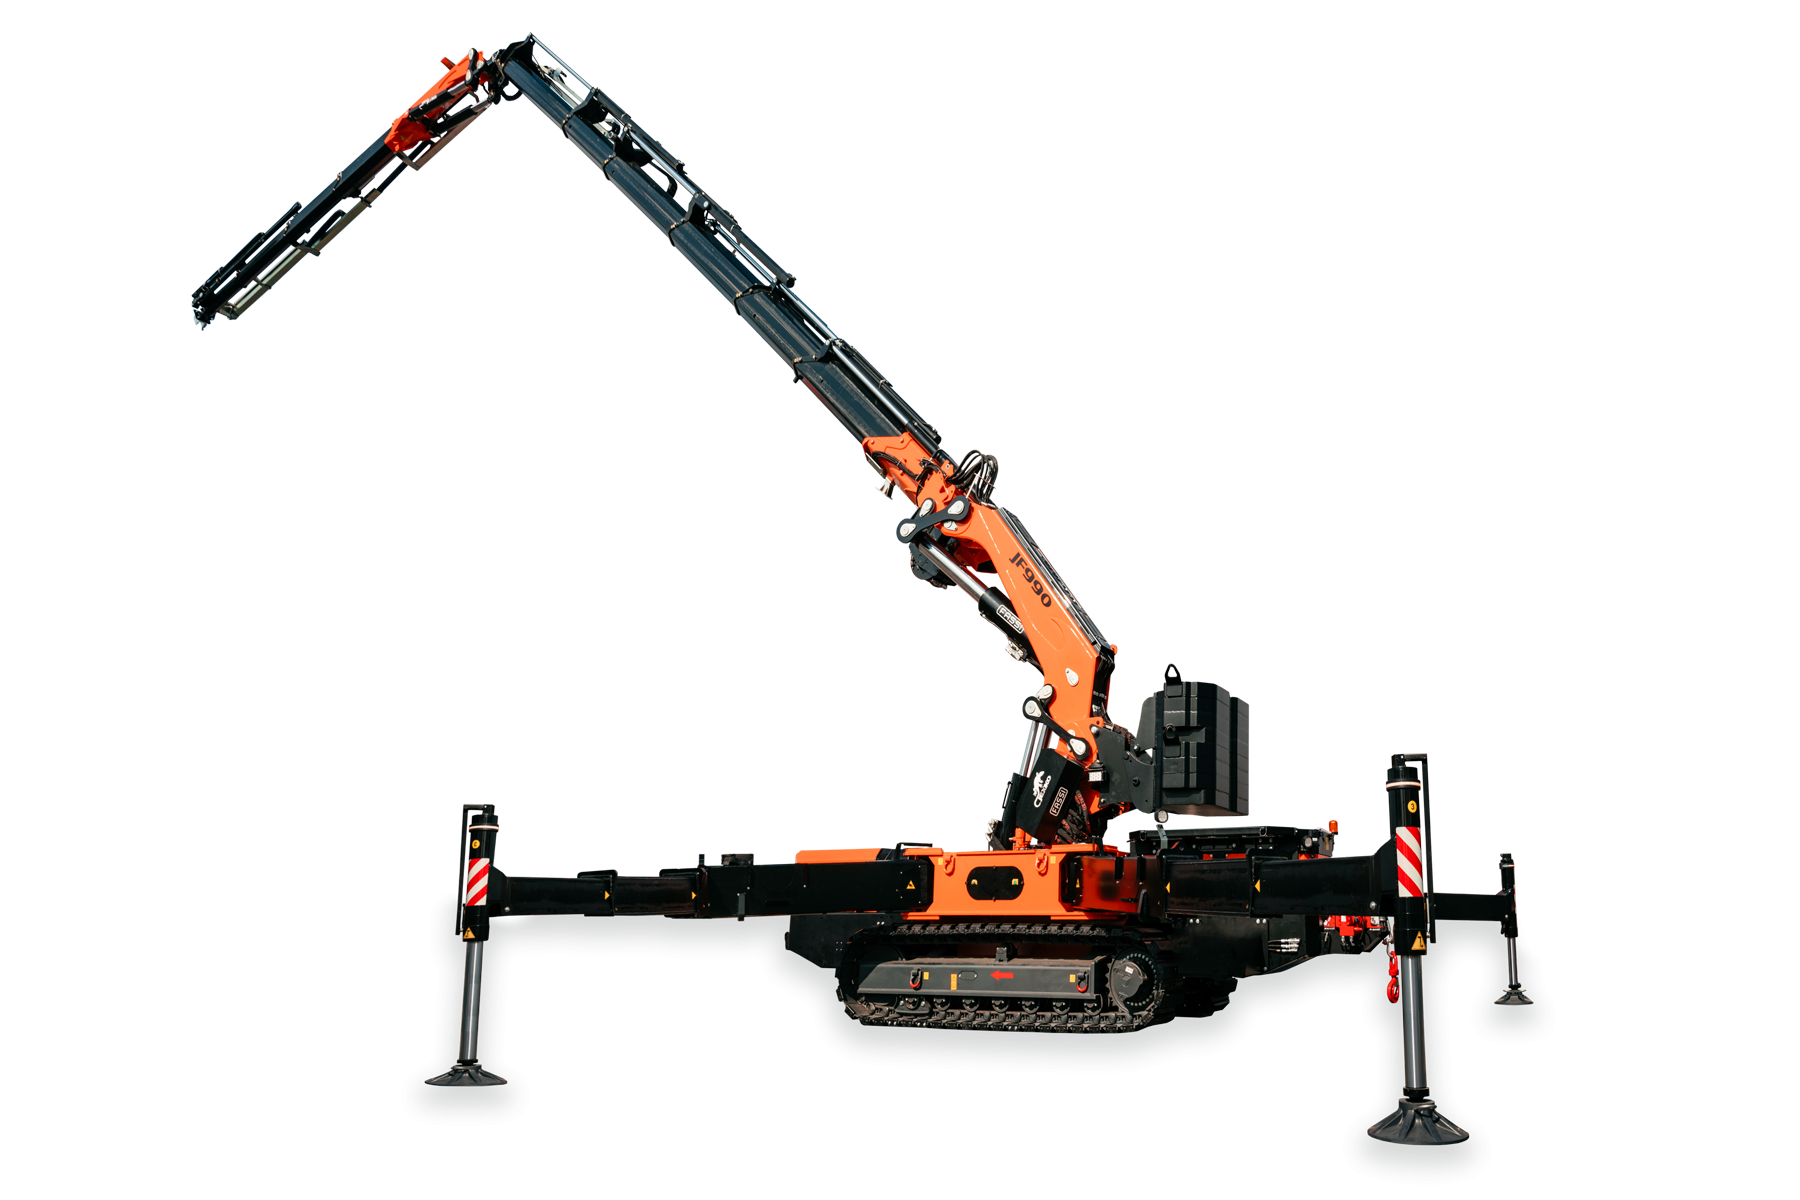 JF990 Articulated Crawler Crane